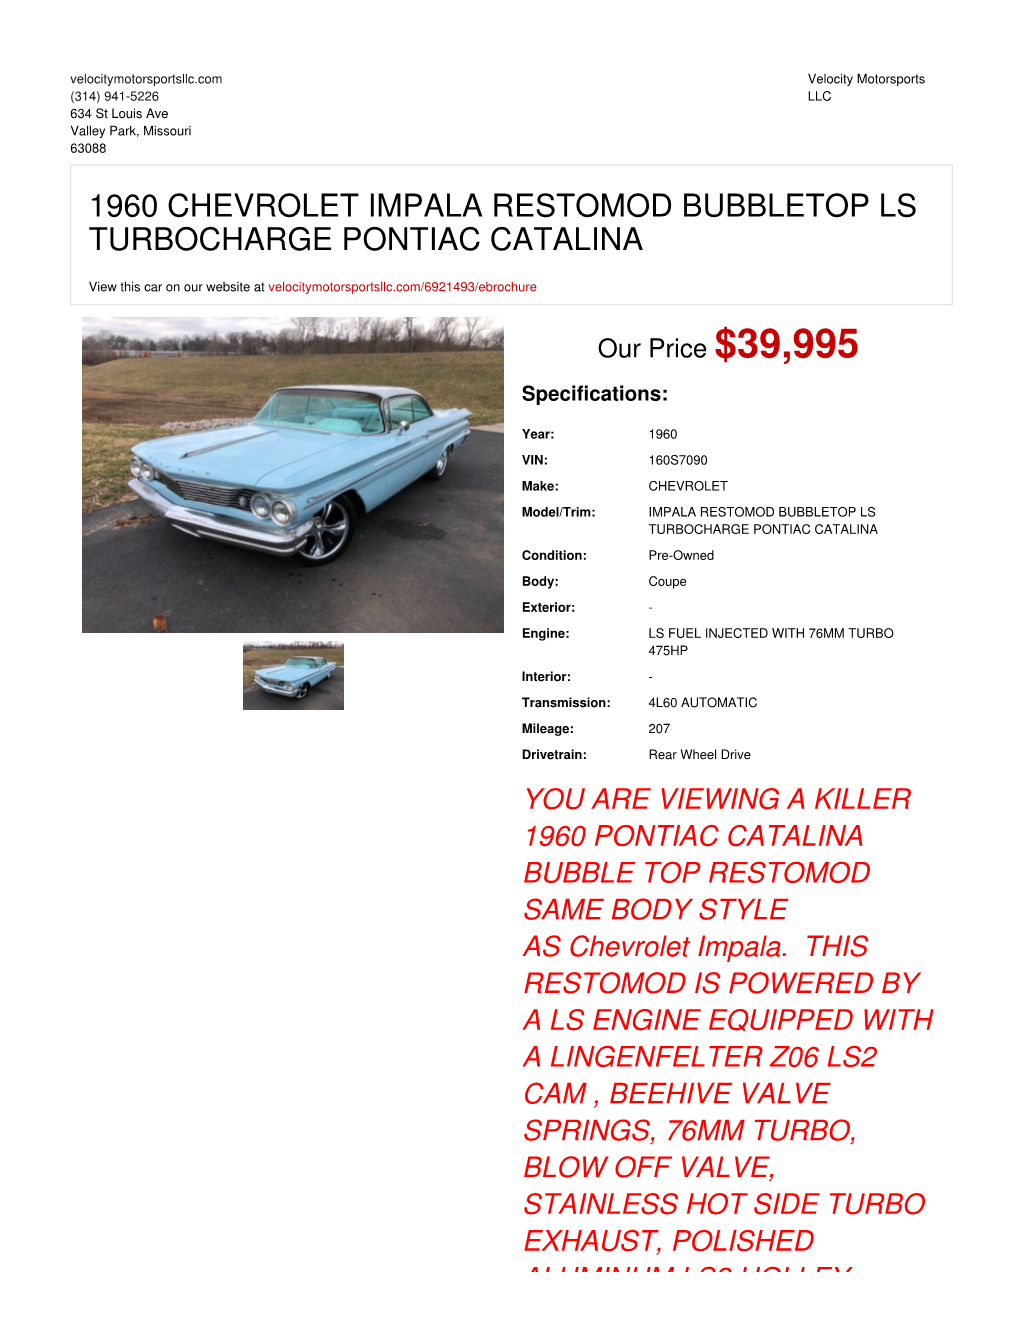 1960 Chevrolet Impala Restomod Bubbletop Ls Turbocharge Pontiac Catalina